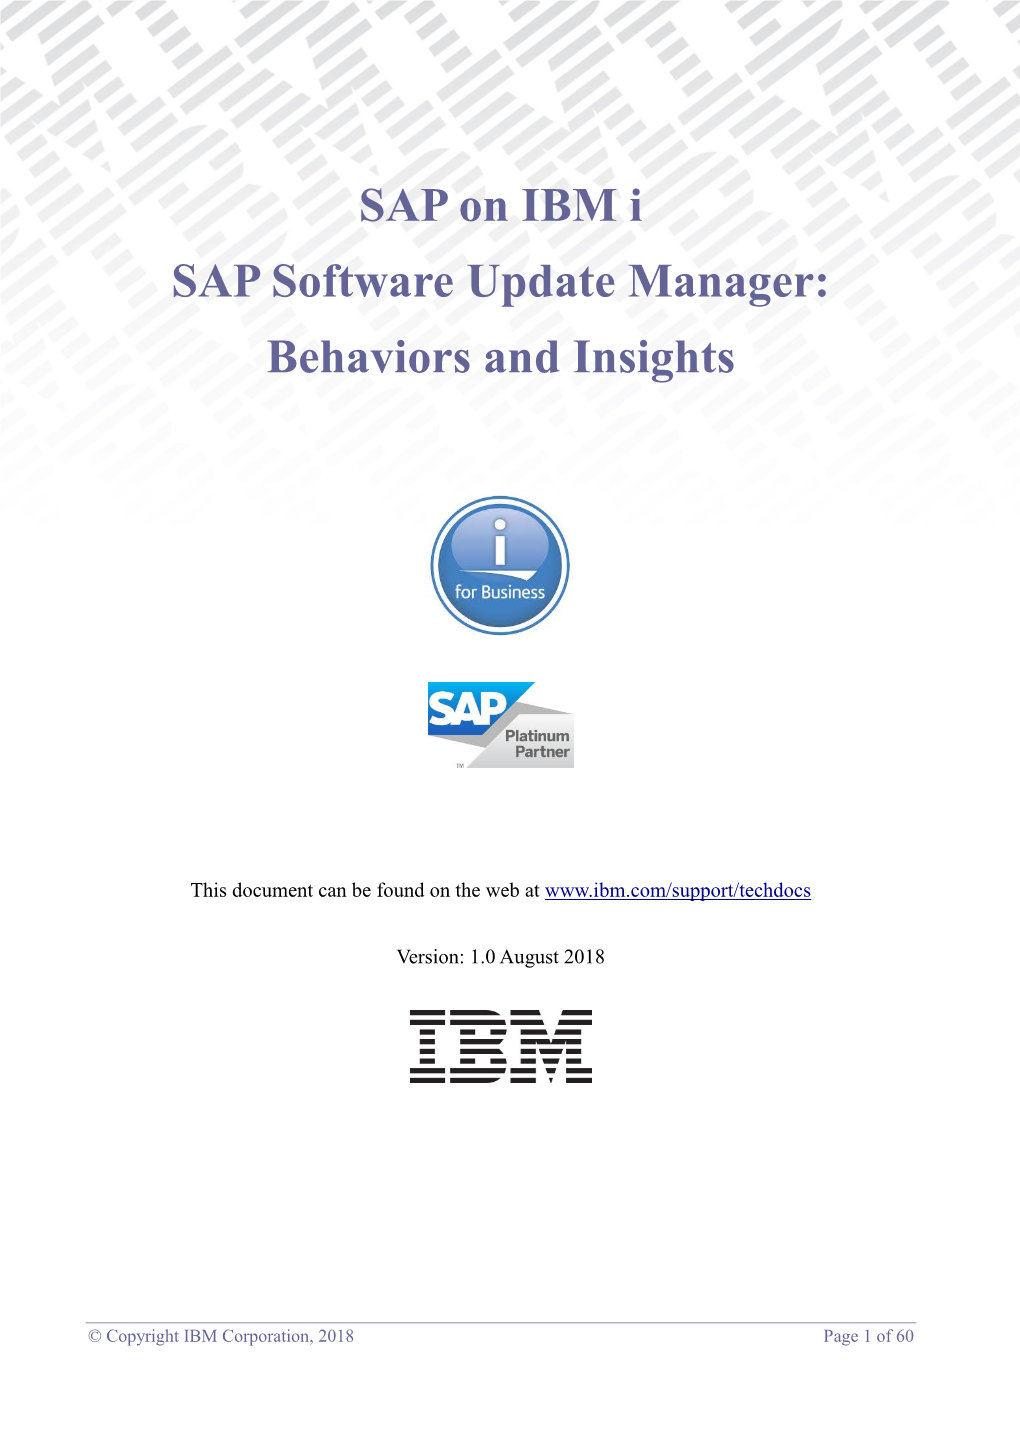 SAP on IBM I - SAP Software Update Manager Version: 1.0 August 2018